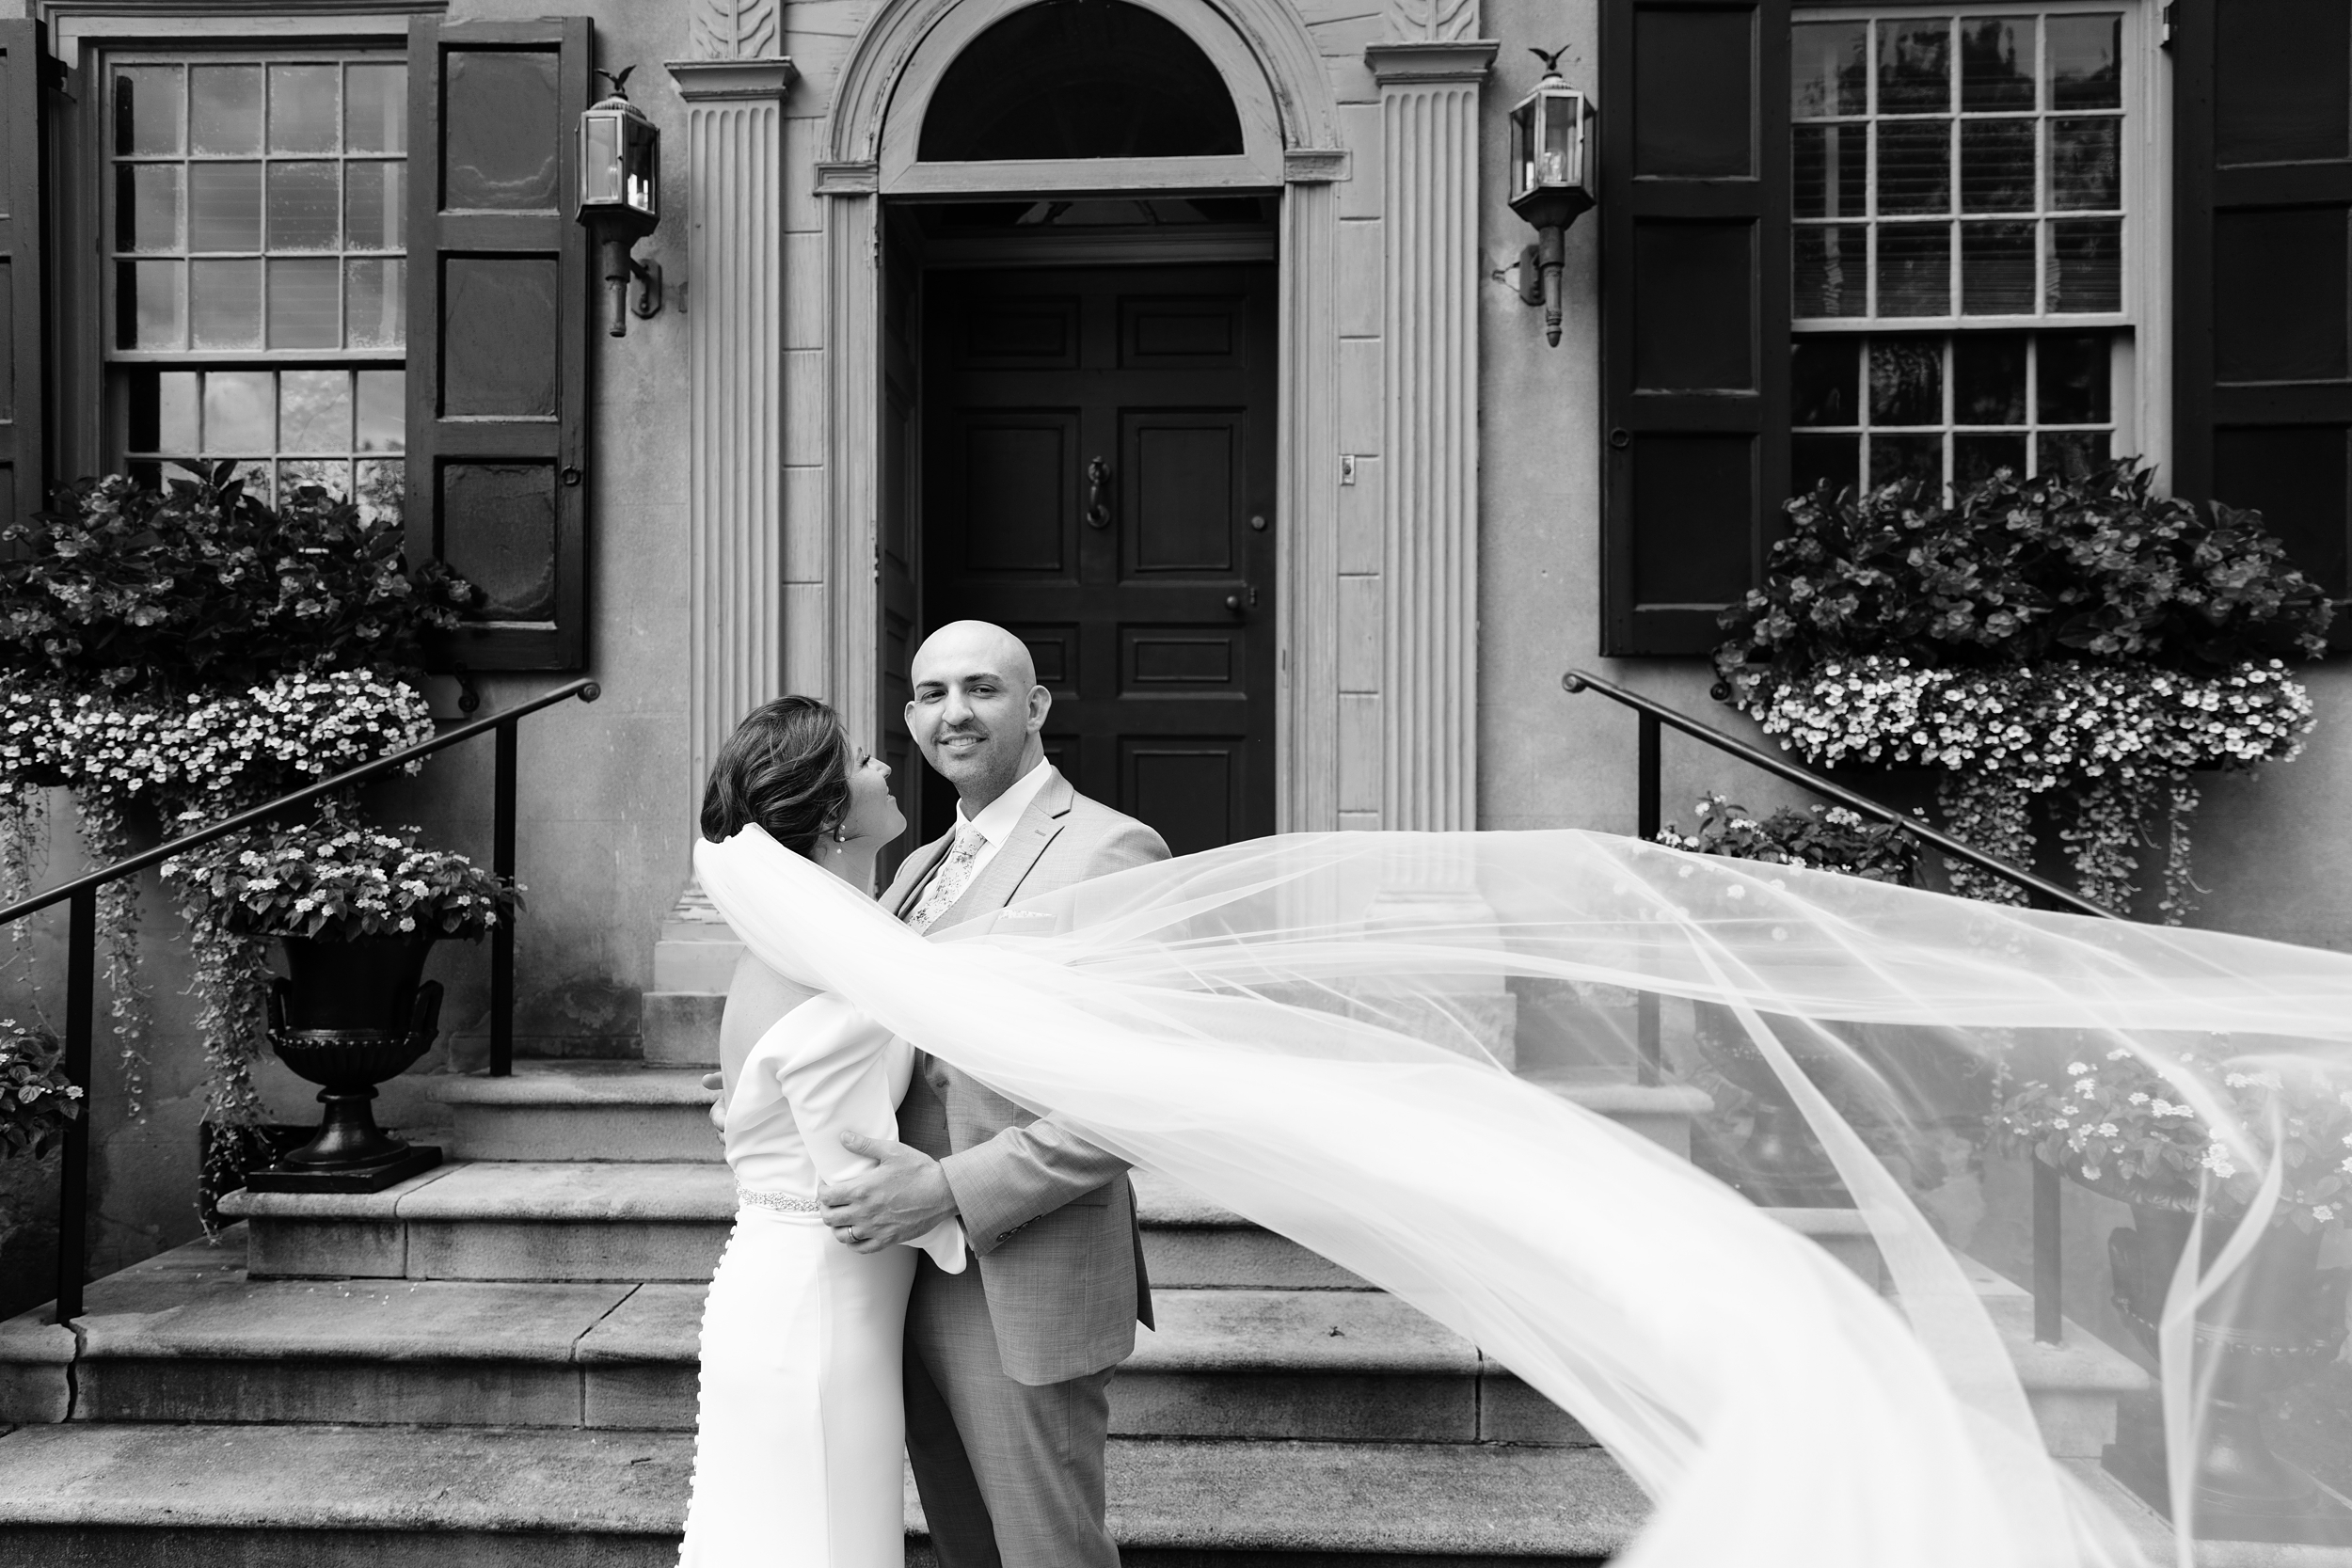 Conestoga House & Gardens Wedding, Lancaster, Pa Wedding. Lancaster, Pa Wedding Photographer